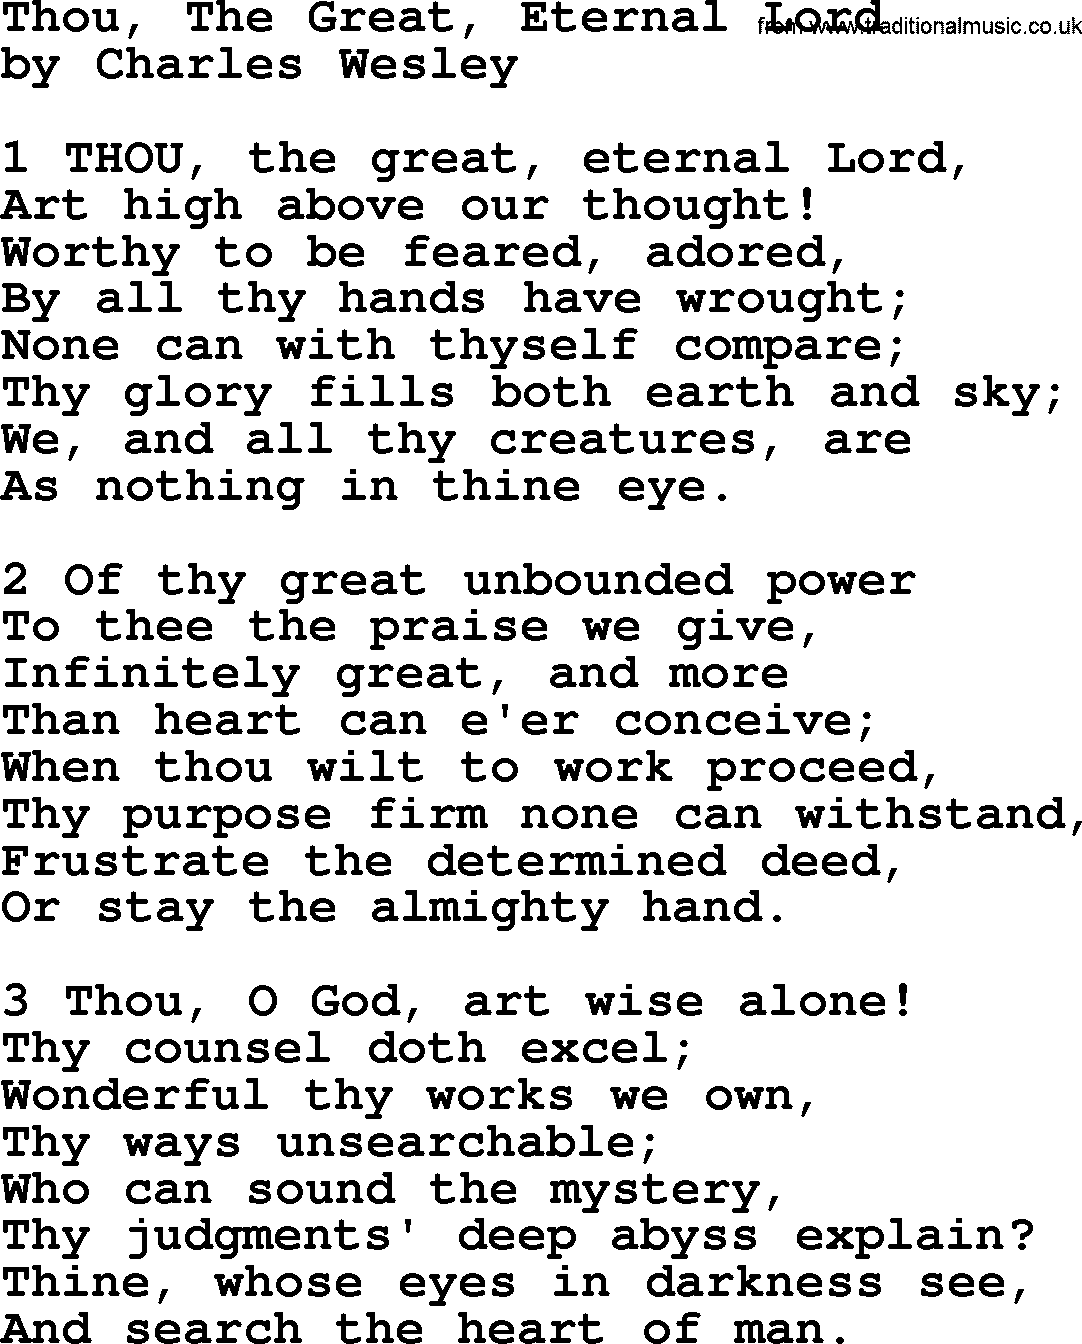 Charles Wesley hymn: Thou, The Great, Eternal Lord, lyrics